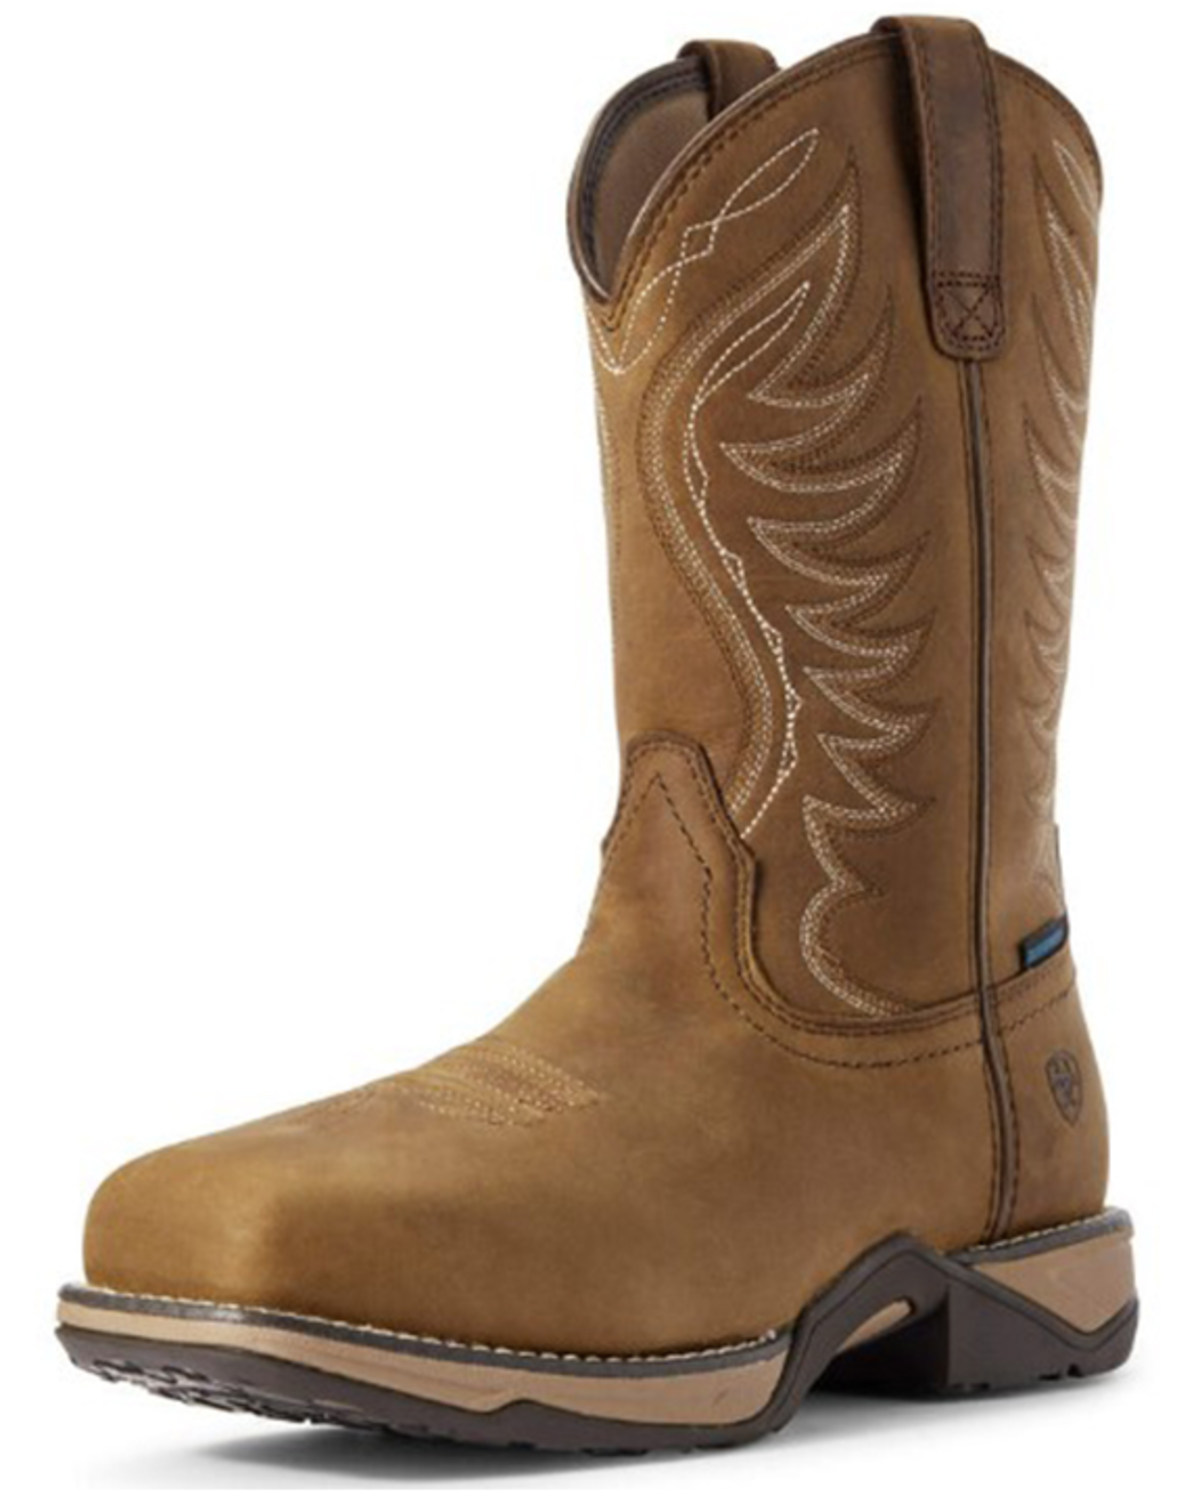 Ariat Women's Anthem Waterproof Western Work Boots - Composite Toe